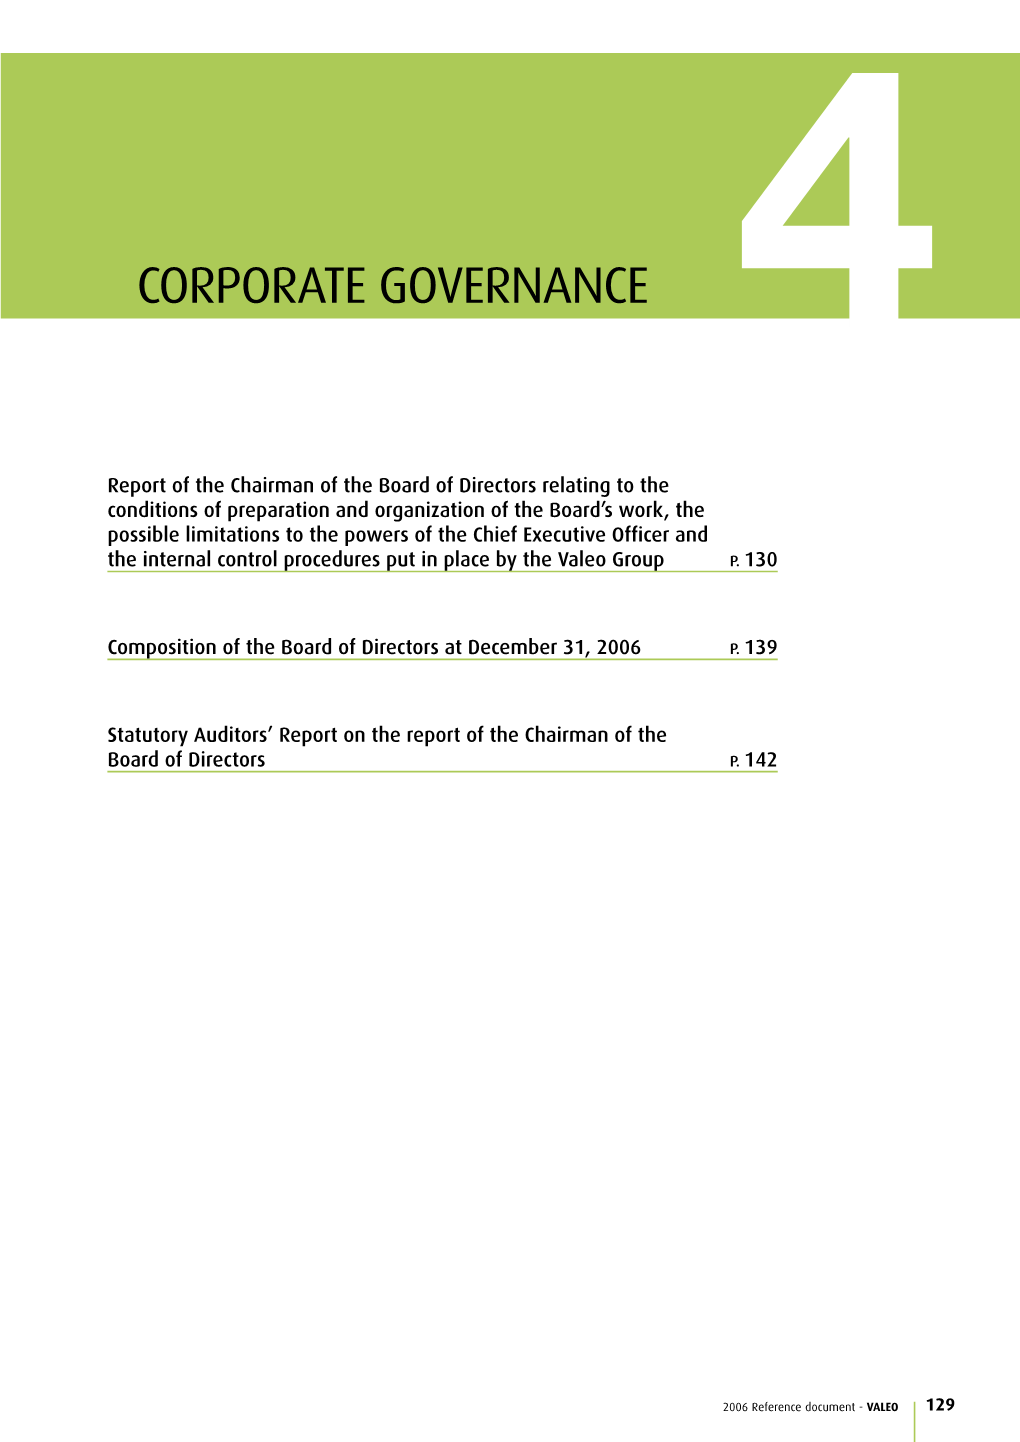 Corporate Governance 4